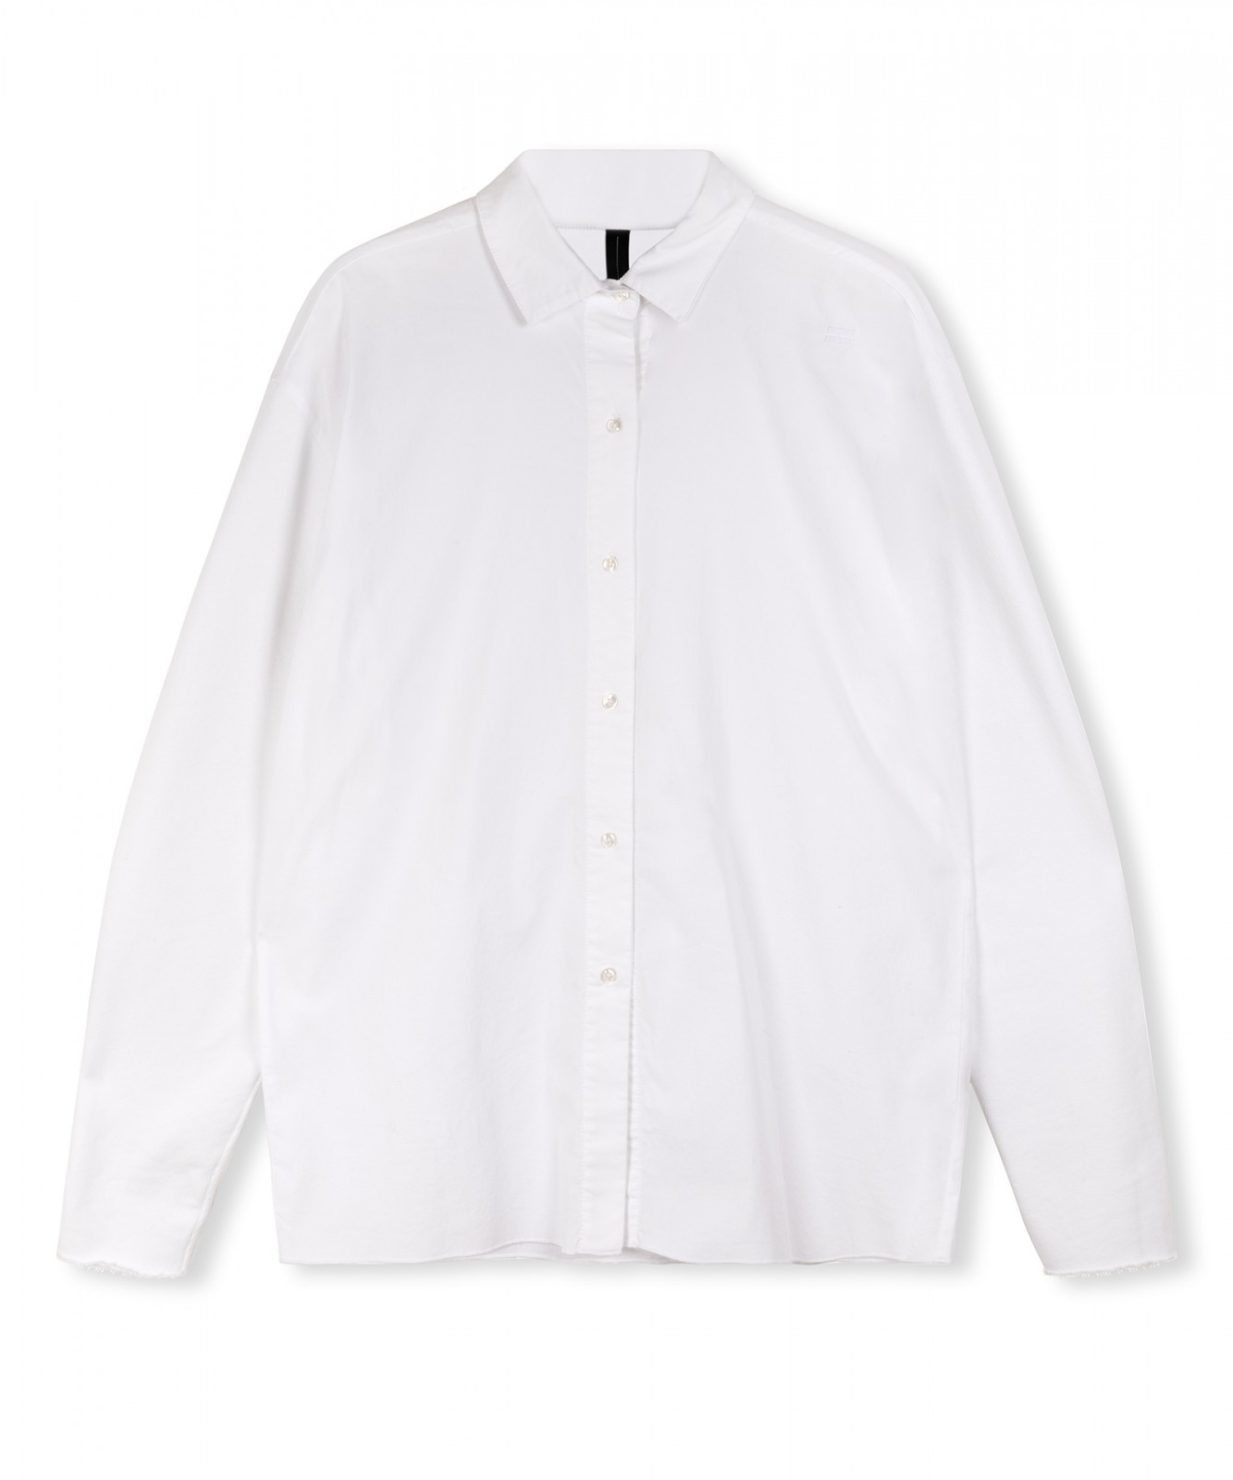 20 405 1203 1001 20 405 1203 1001 2 10days Amsterdam Fashion Oversized Shirt White (2)